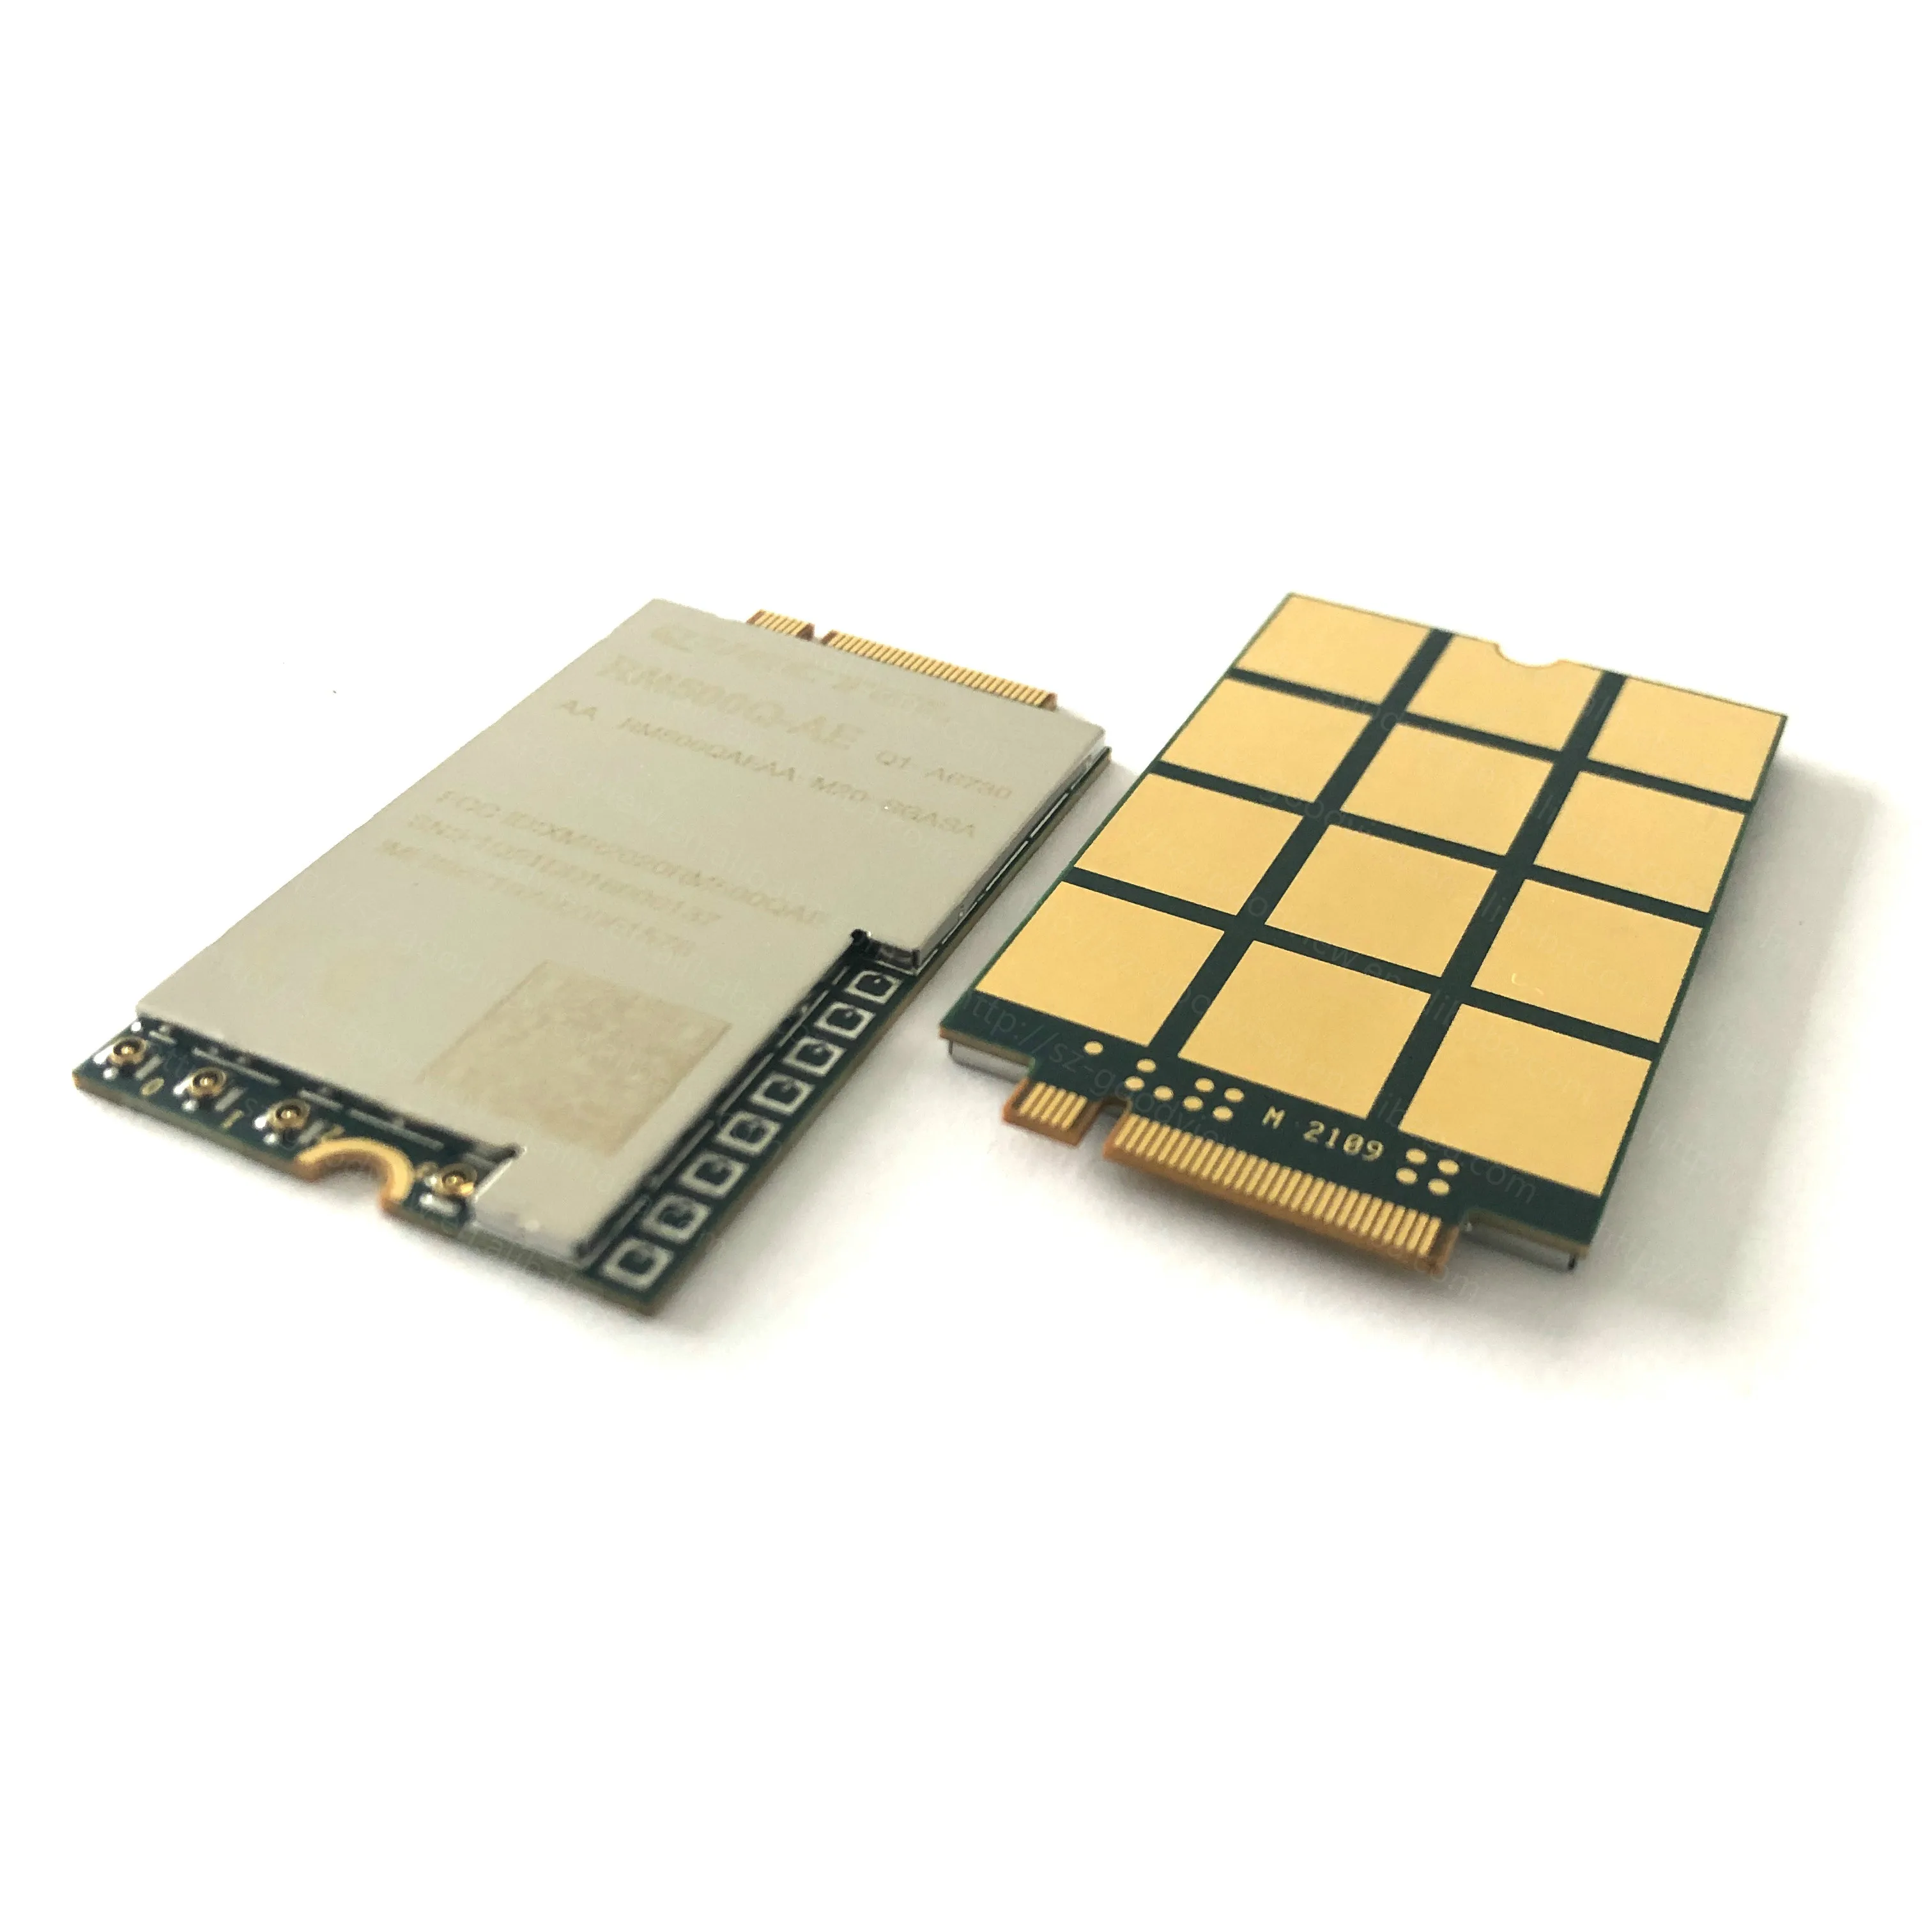 Quectel RM500Q-AE 5G NR Module sub-6GHz module LTE Cat16 USB3.1 GNSS MIMO Compatible